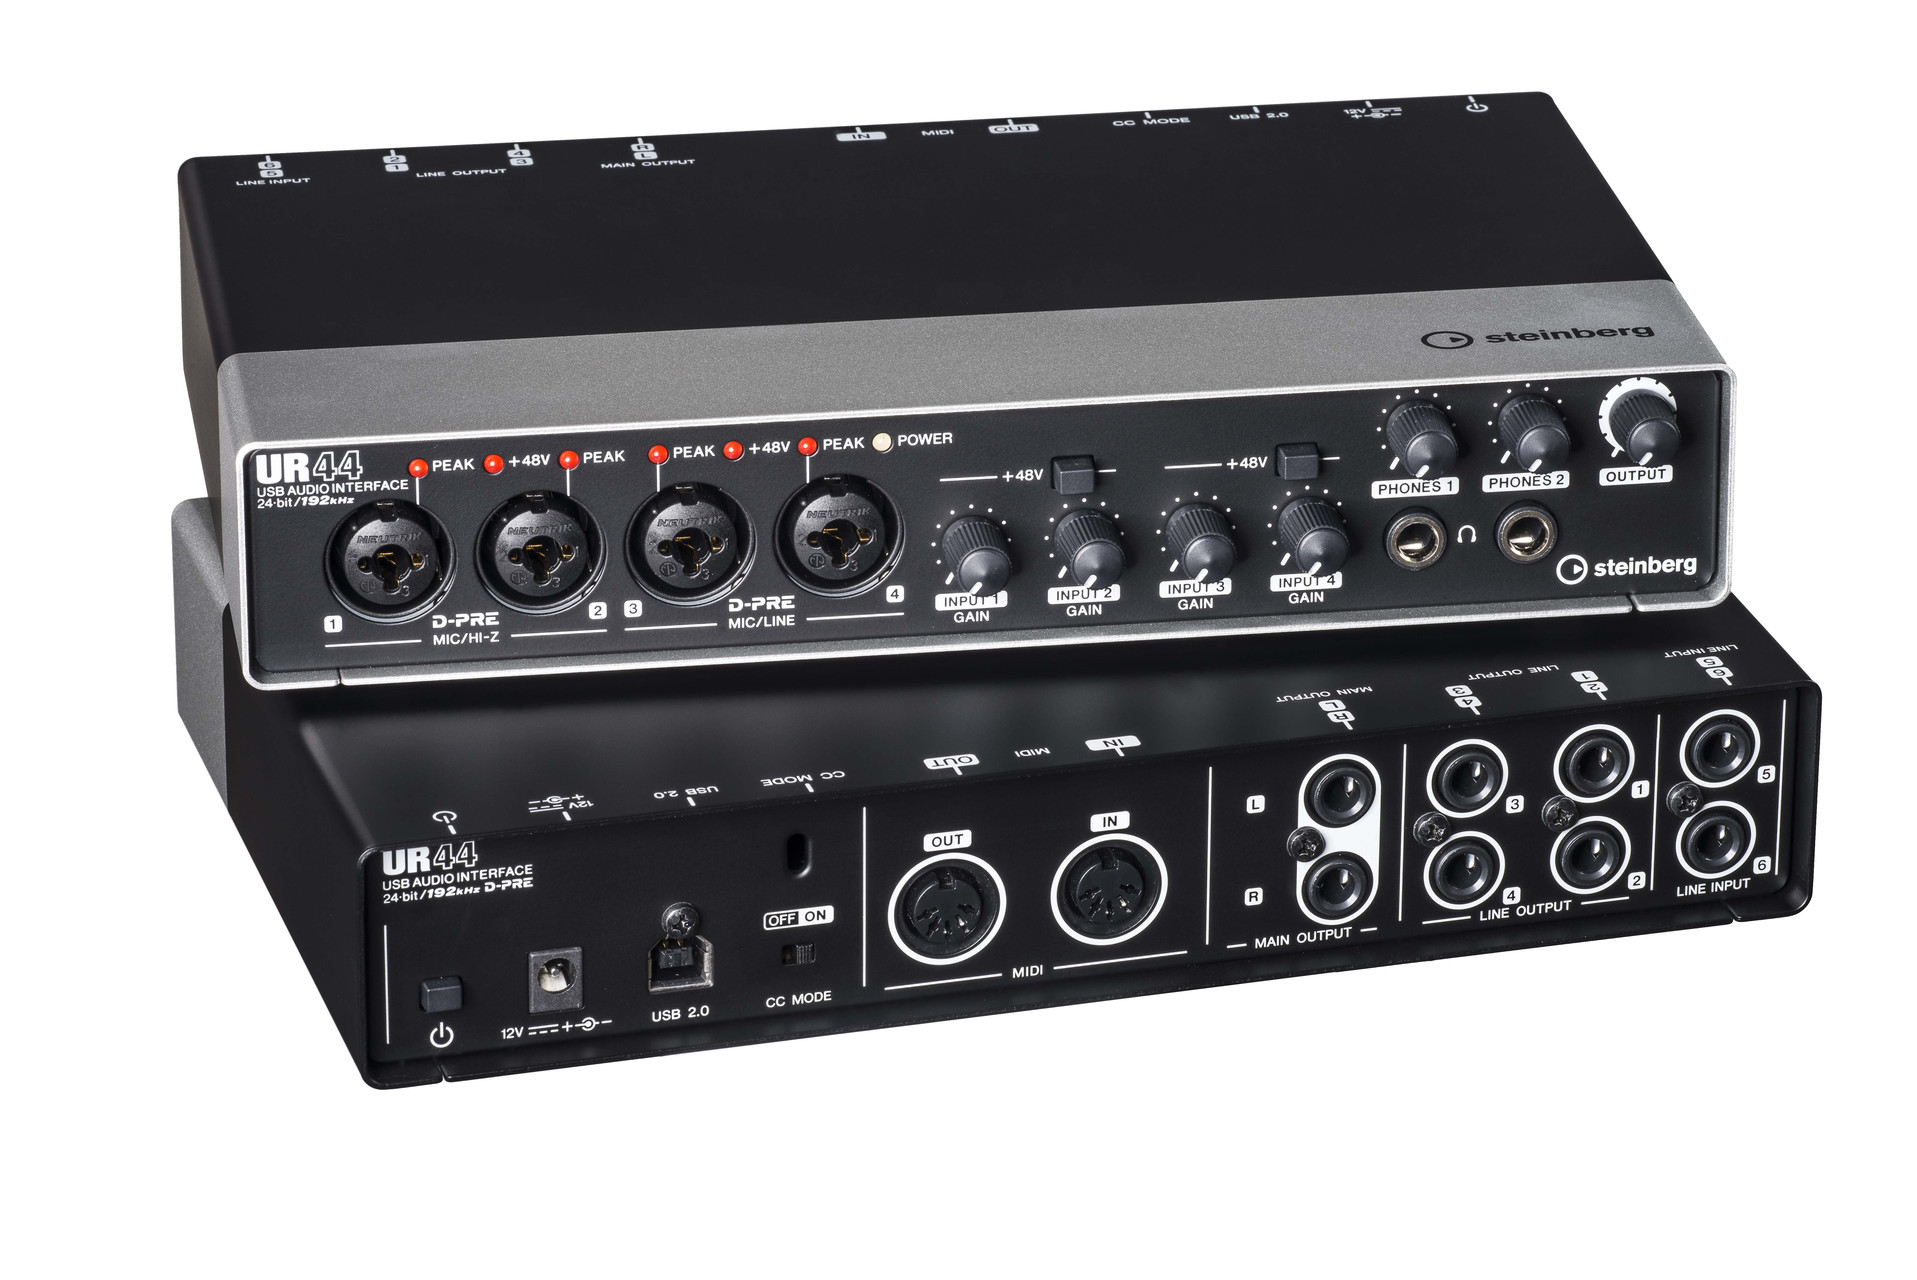 Steinberg UR44 audio interface announced